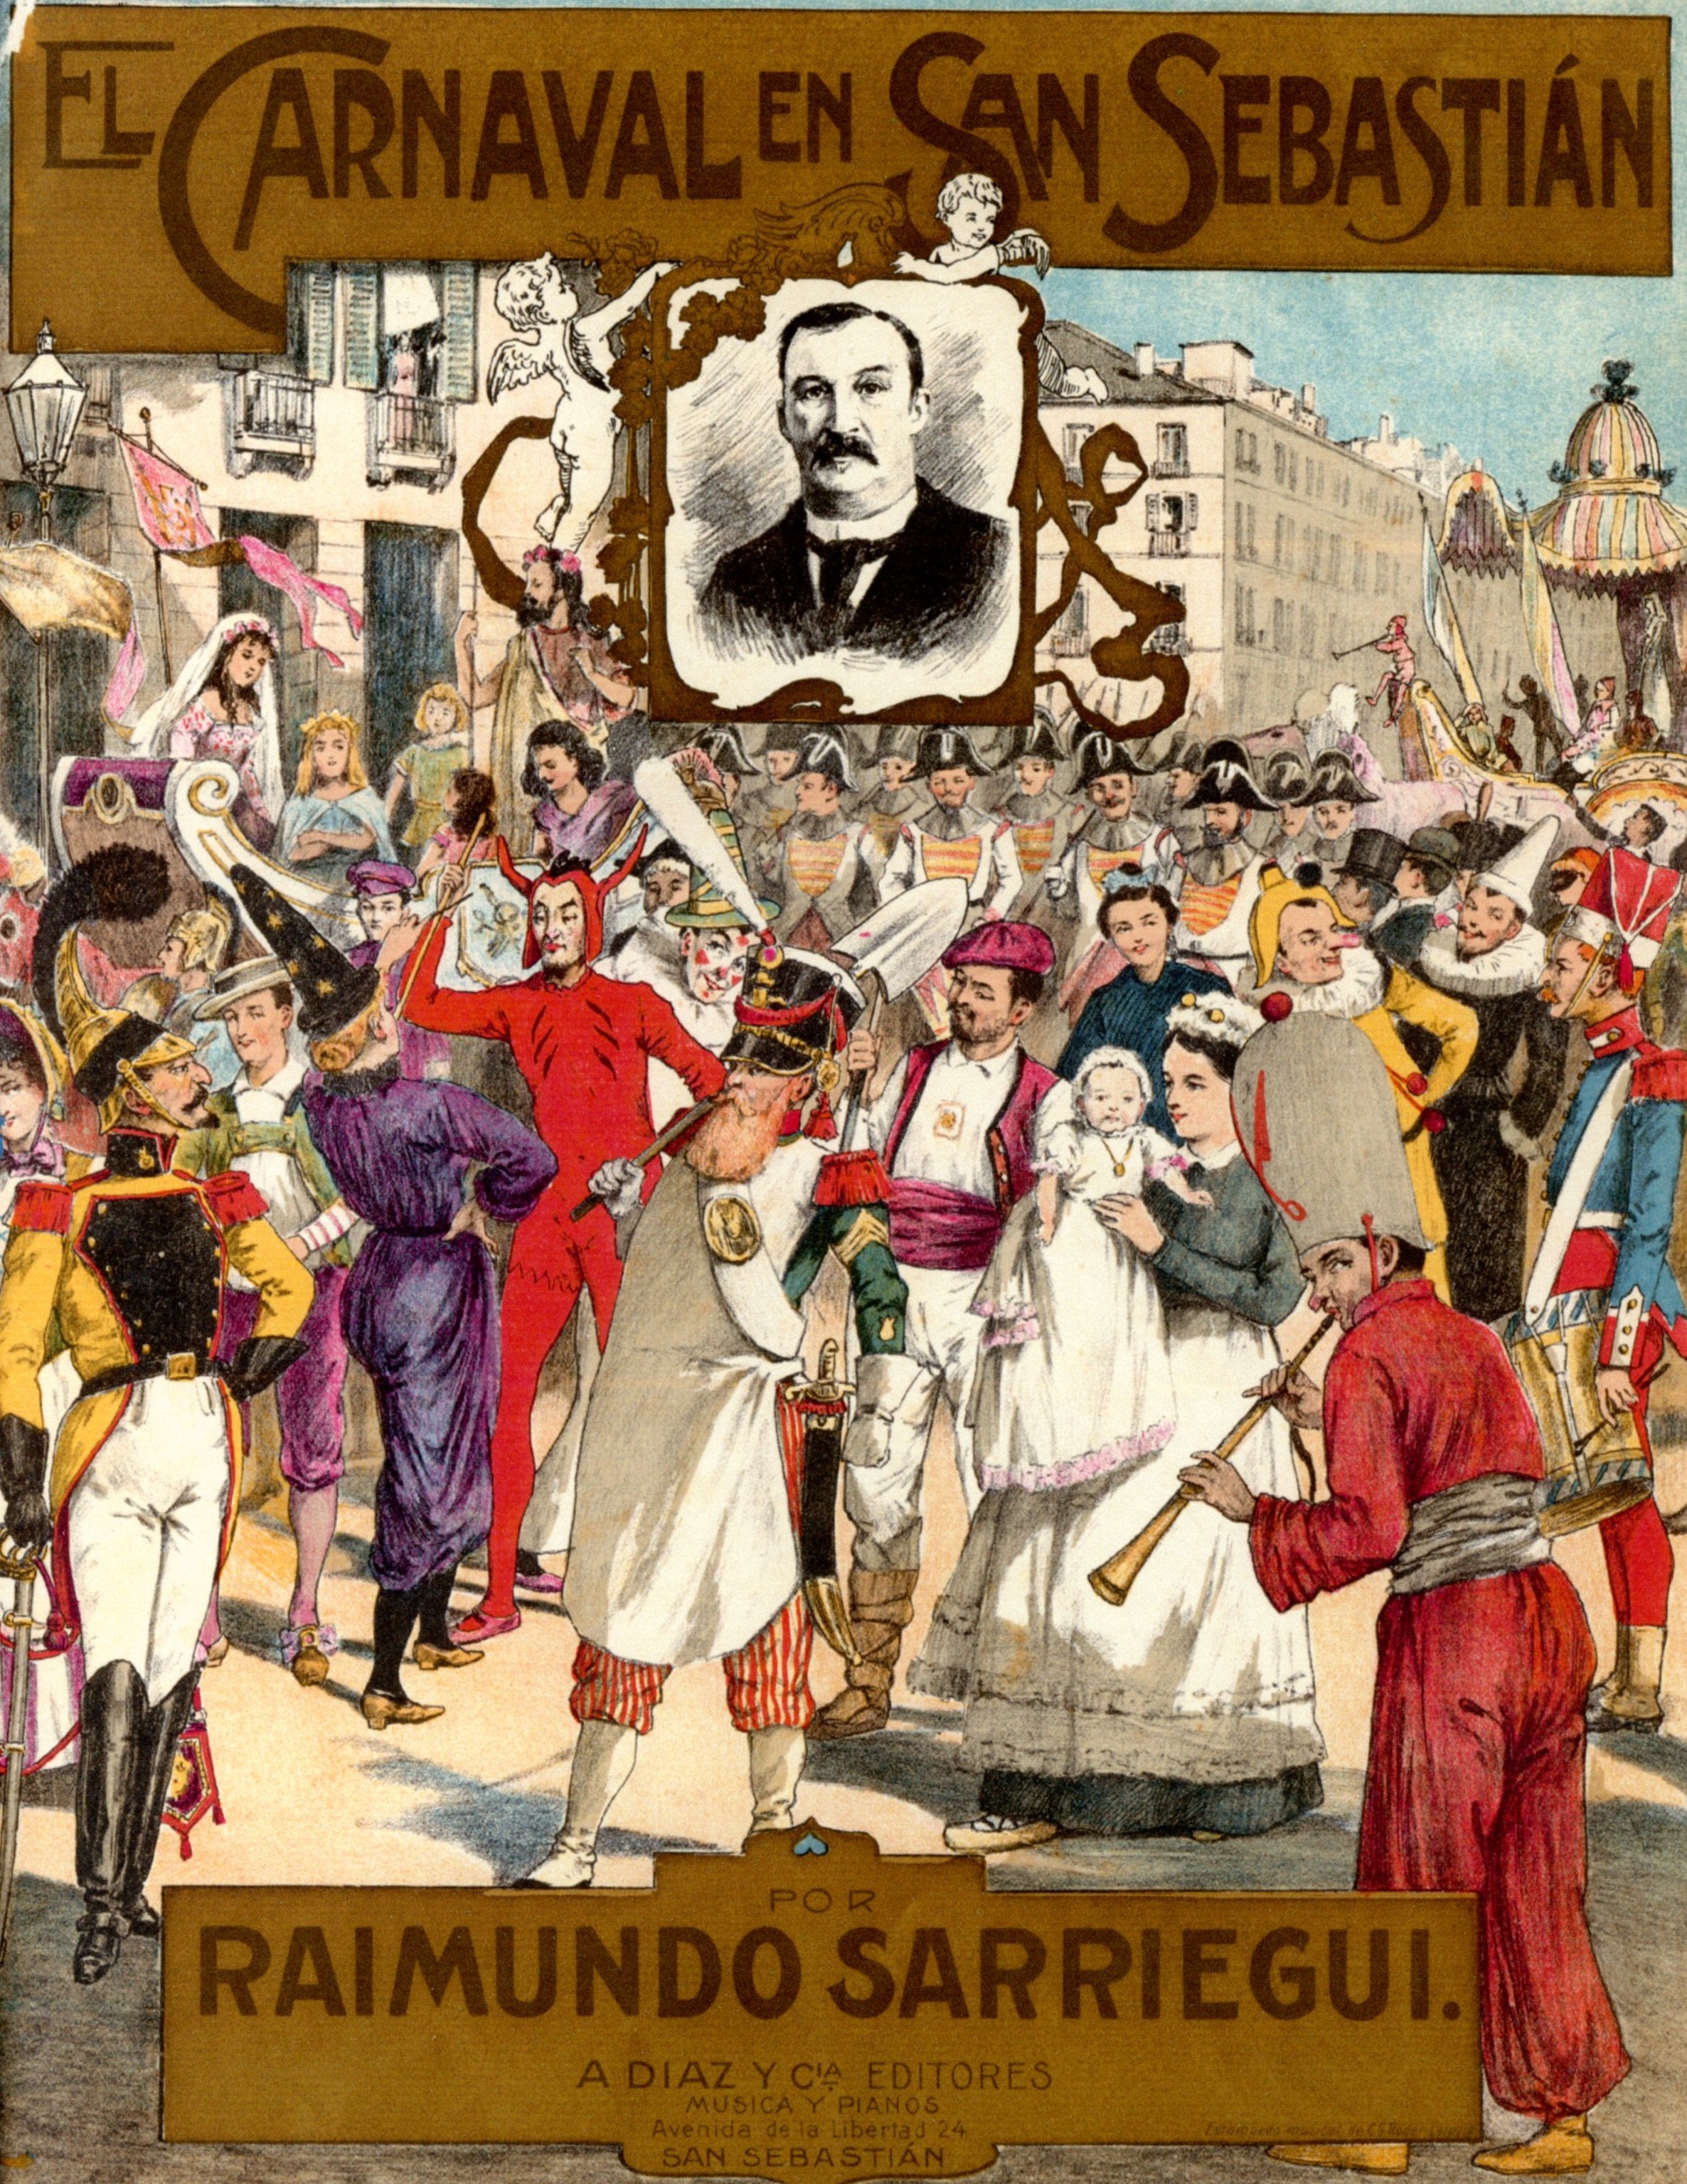 Sarriegi - Music of Carnival edited in 1898